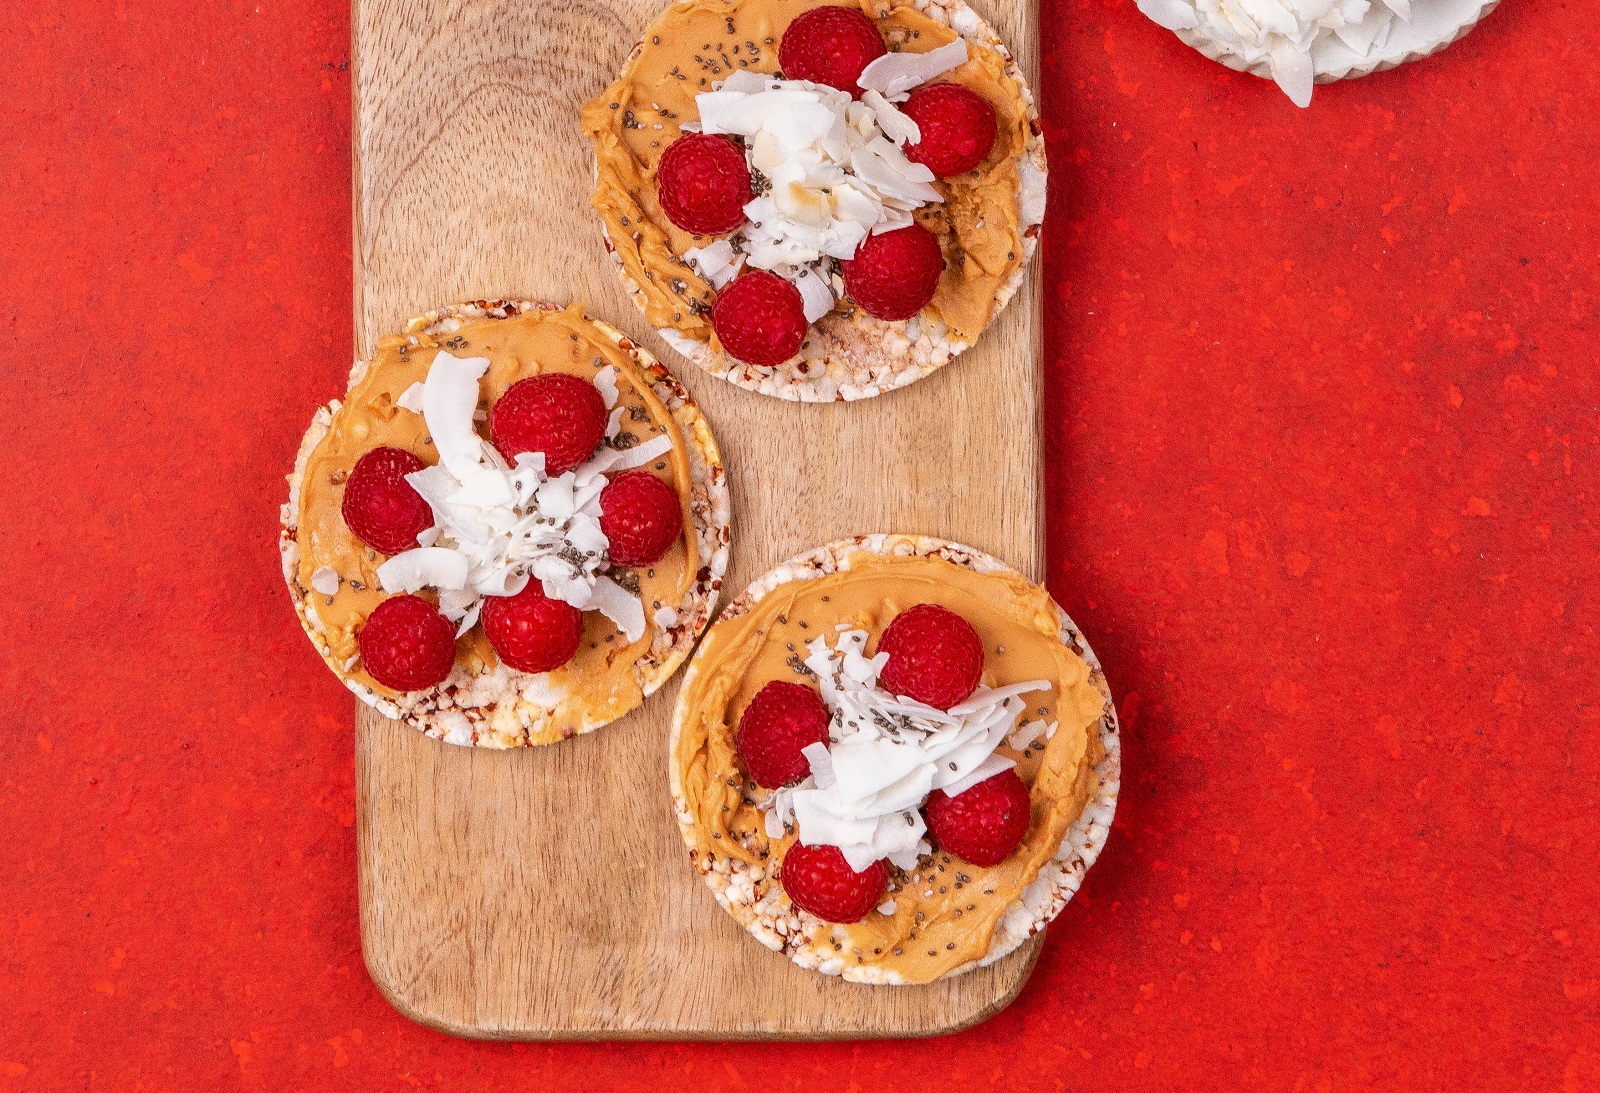 Raspberry, Peanut Butter, Coconut Flakes & Chia on CORN THINS slices (vegetarian & vegan)